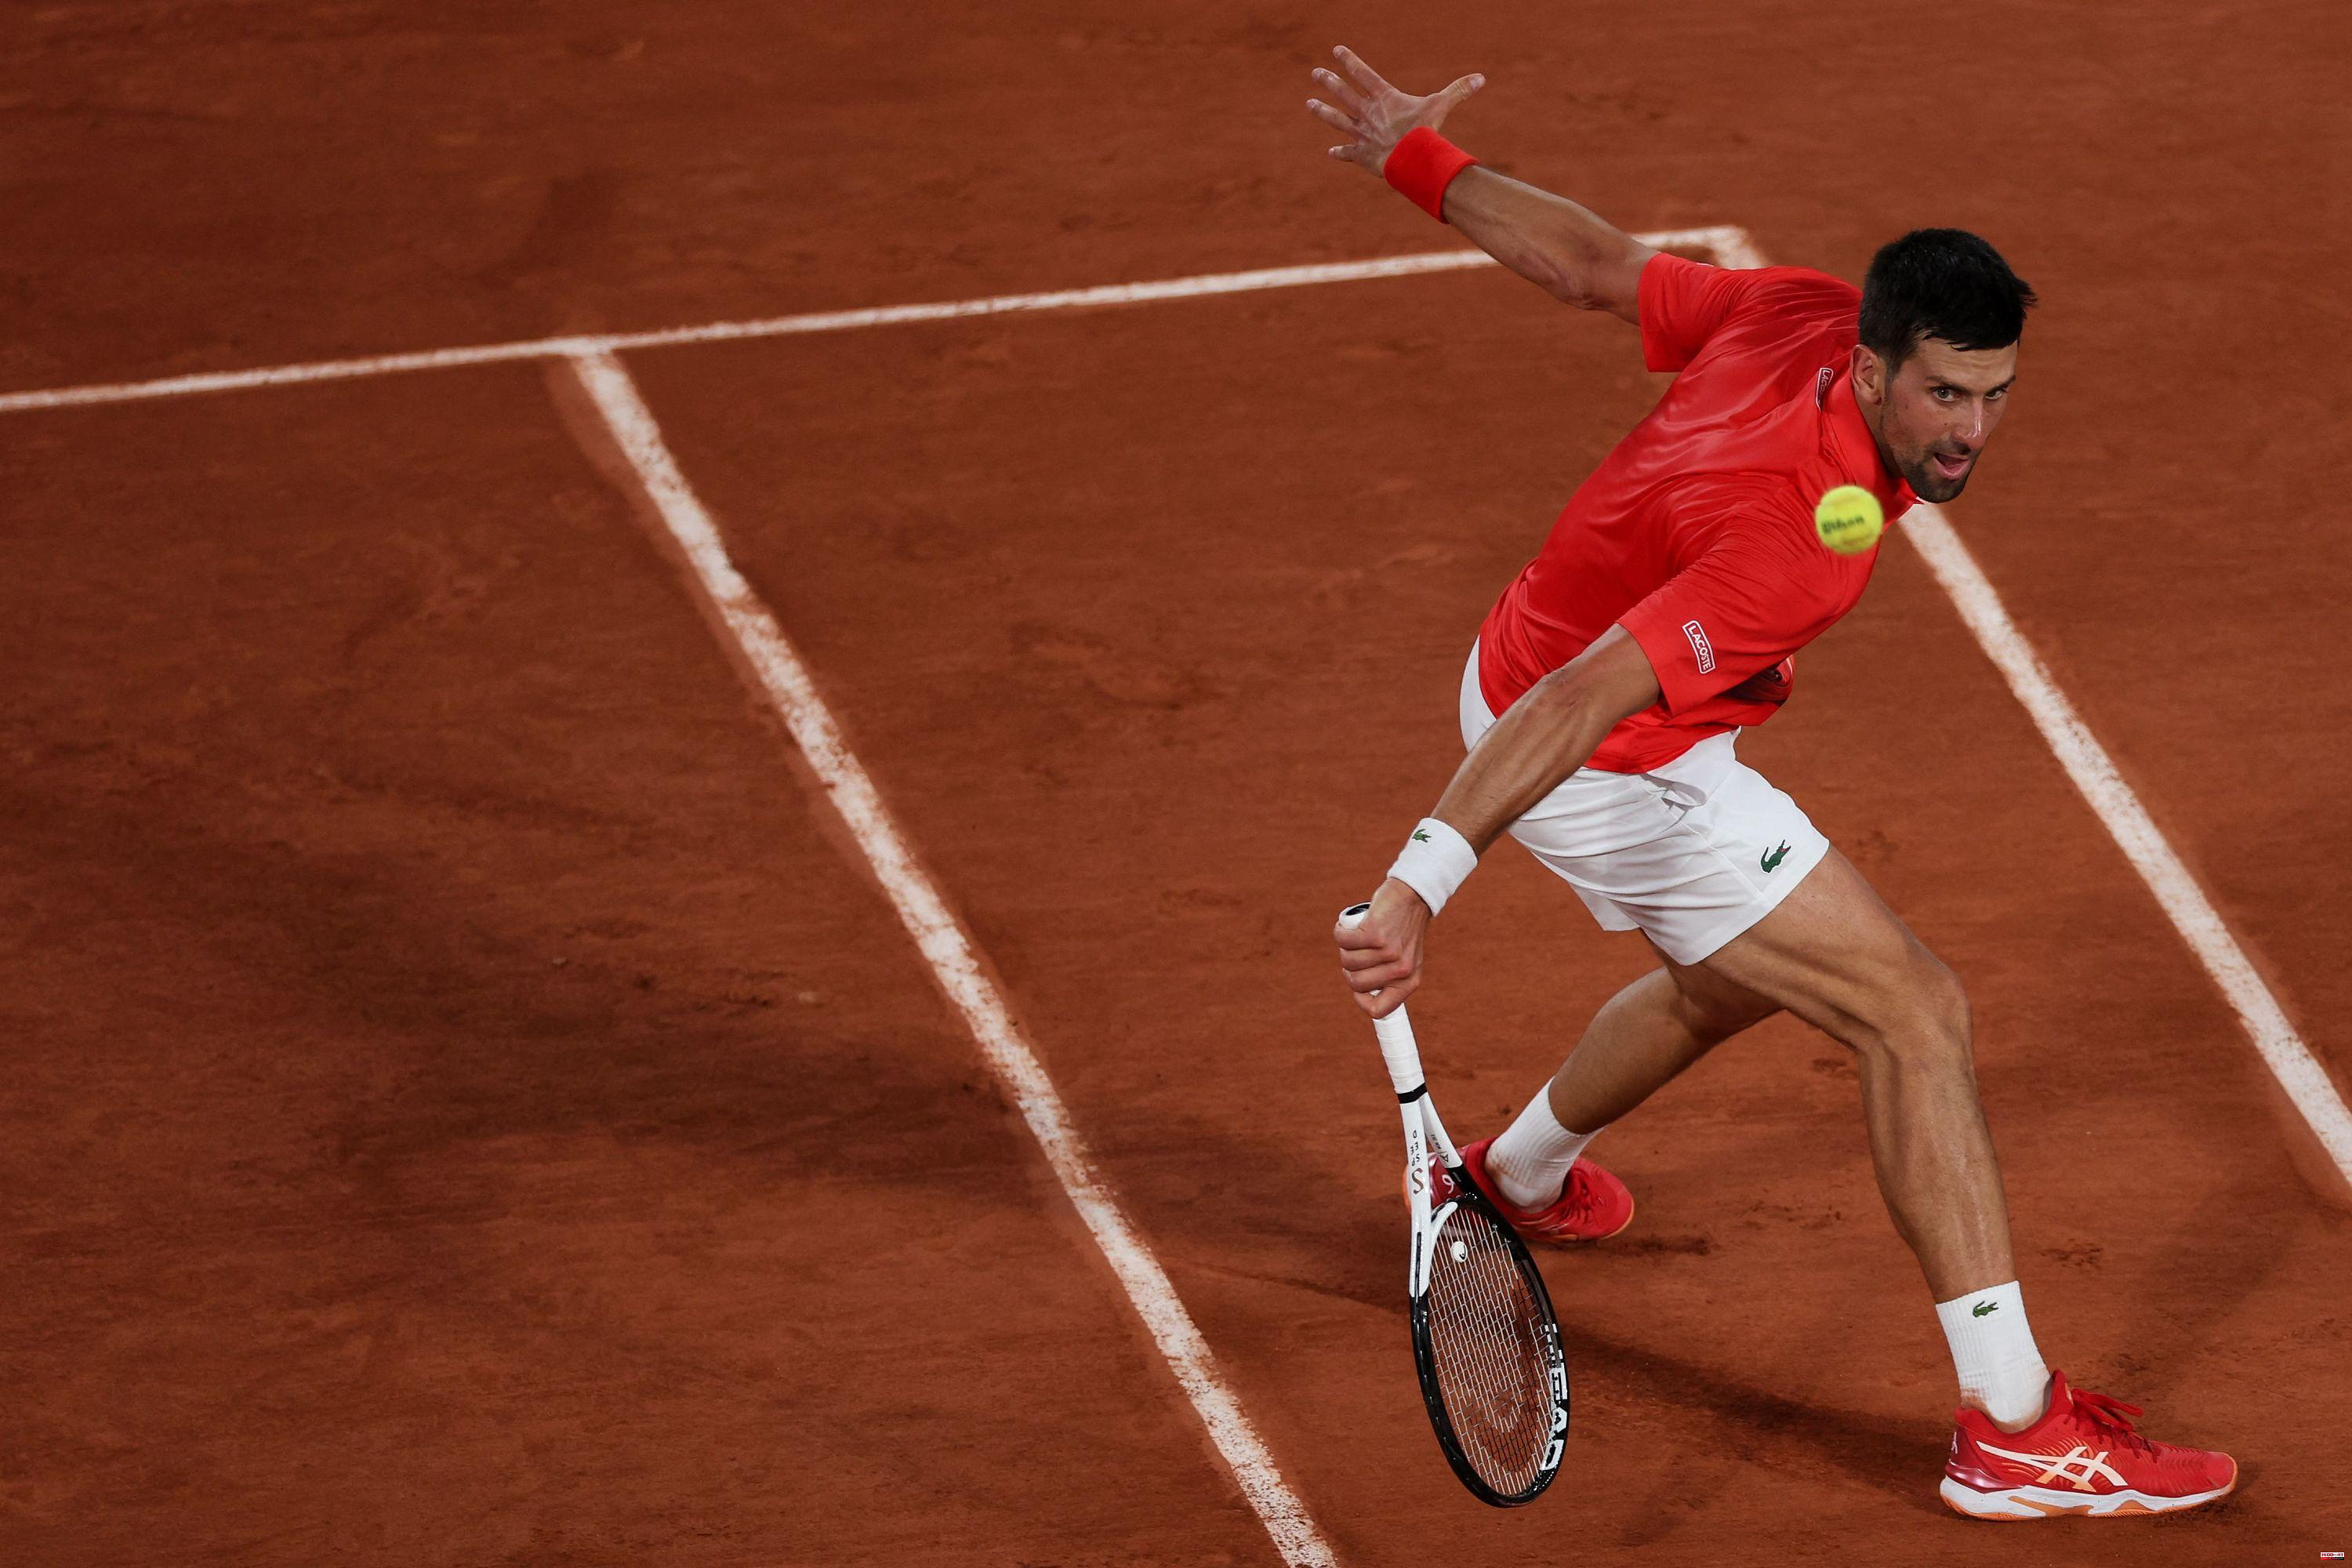 Tennis: Djokovic says he "intends" to participate in Wimbledon